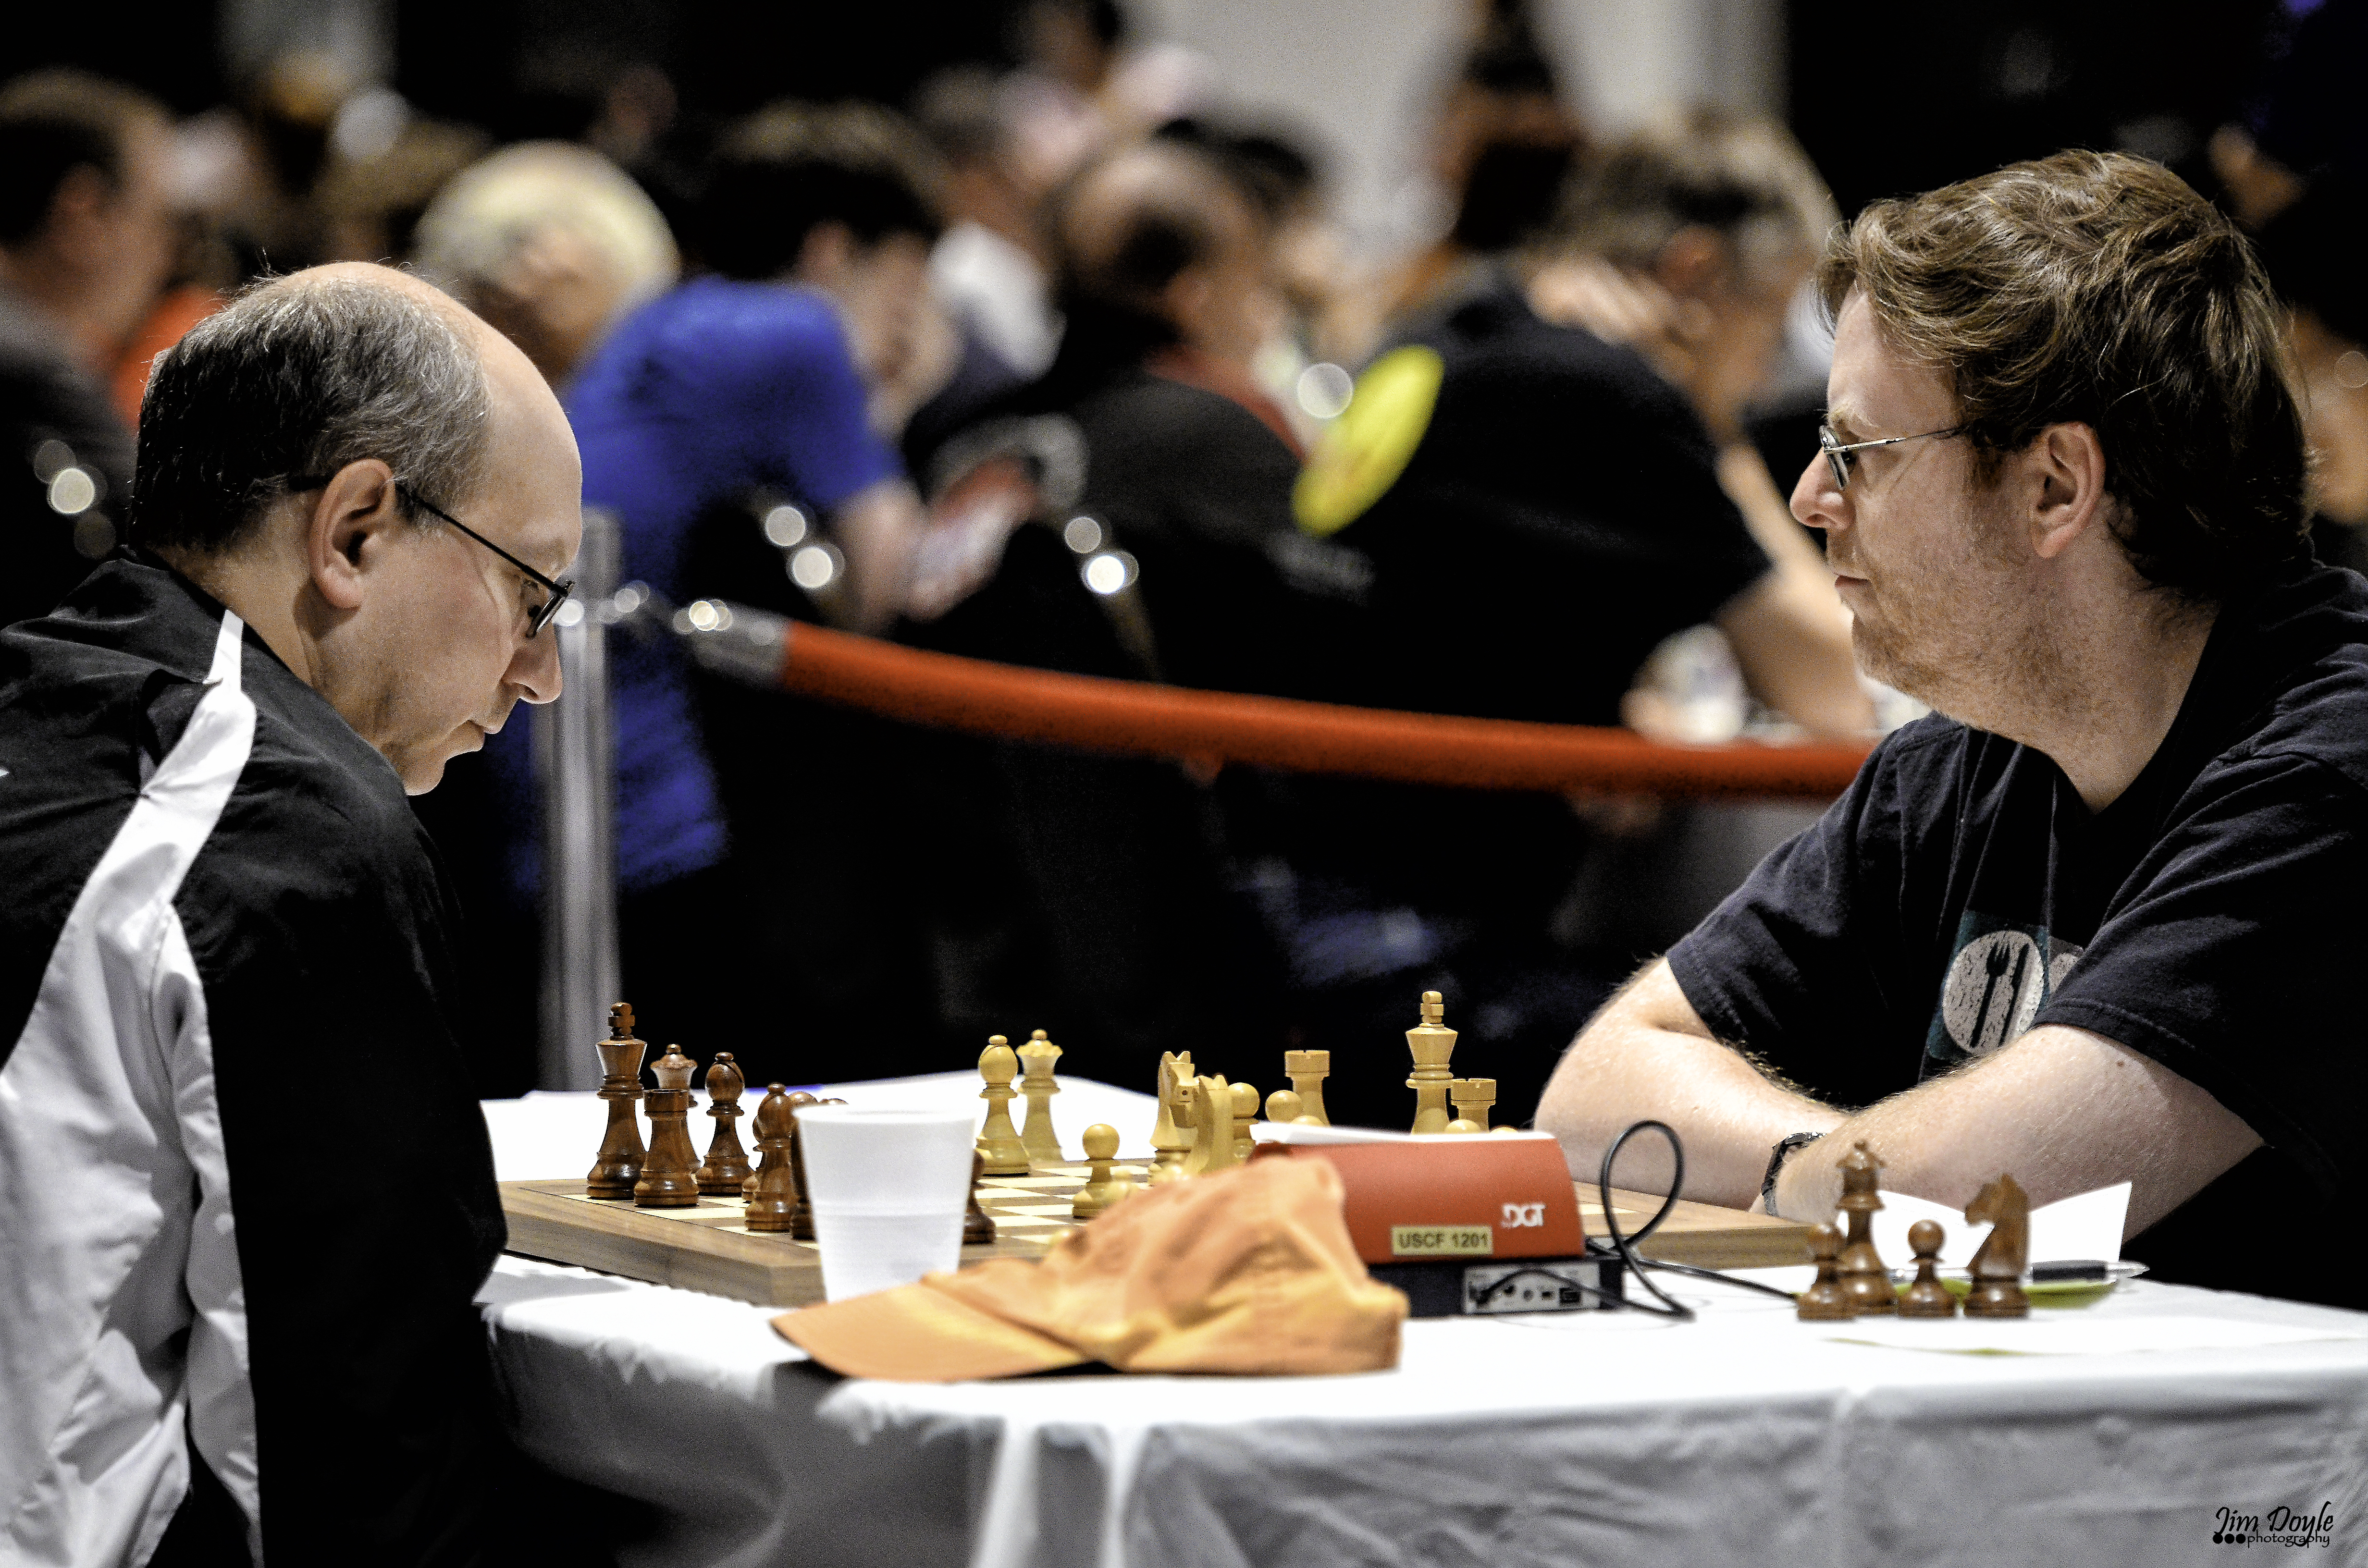 Nyzhnyk triumphs at 2018 World Open - The Chess Drum